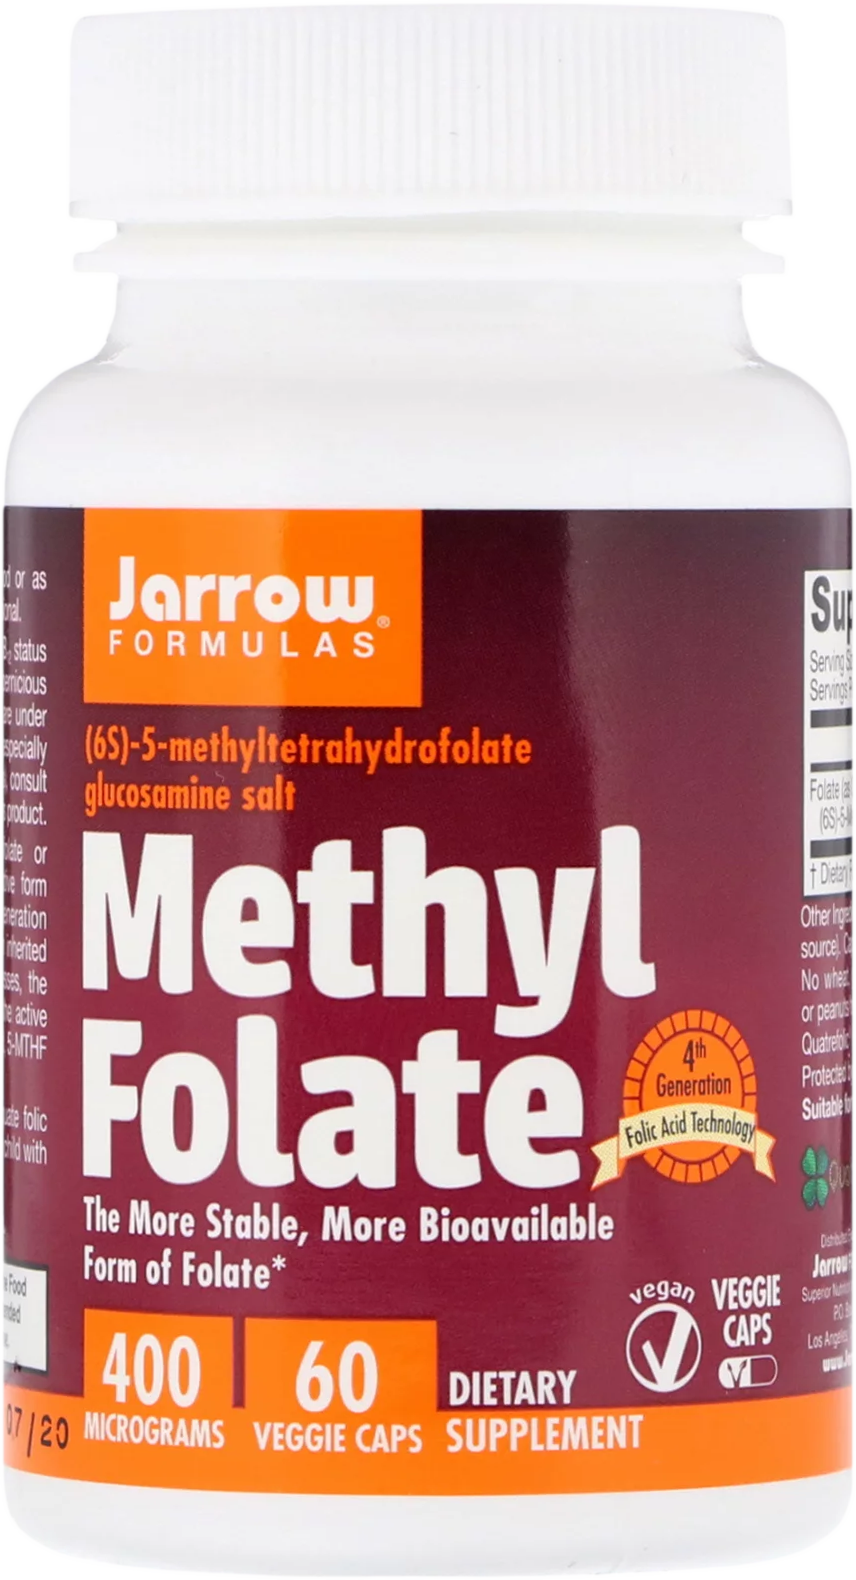 Methyl Folate 400 mcg - BadiZdrav.BG